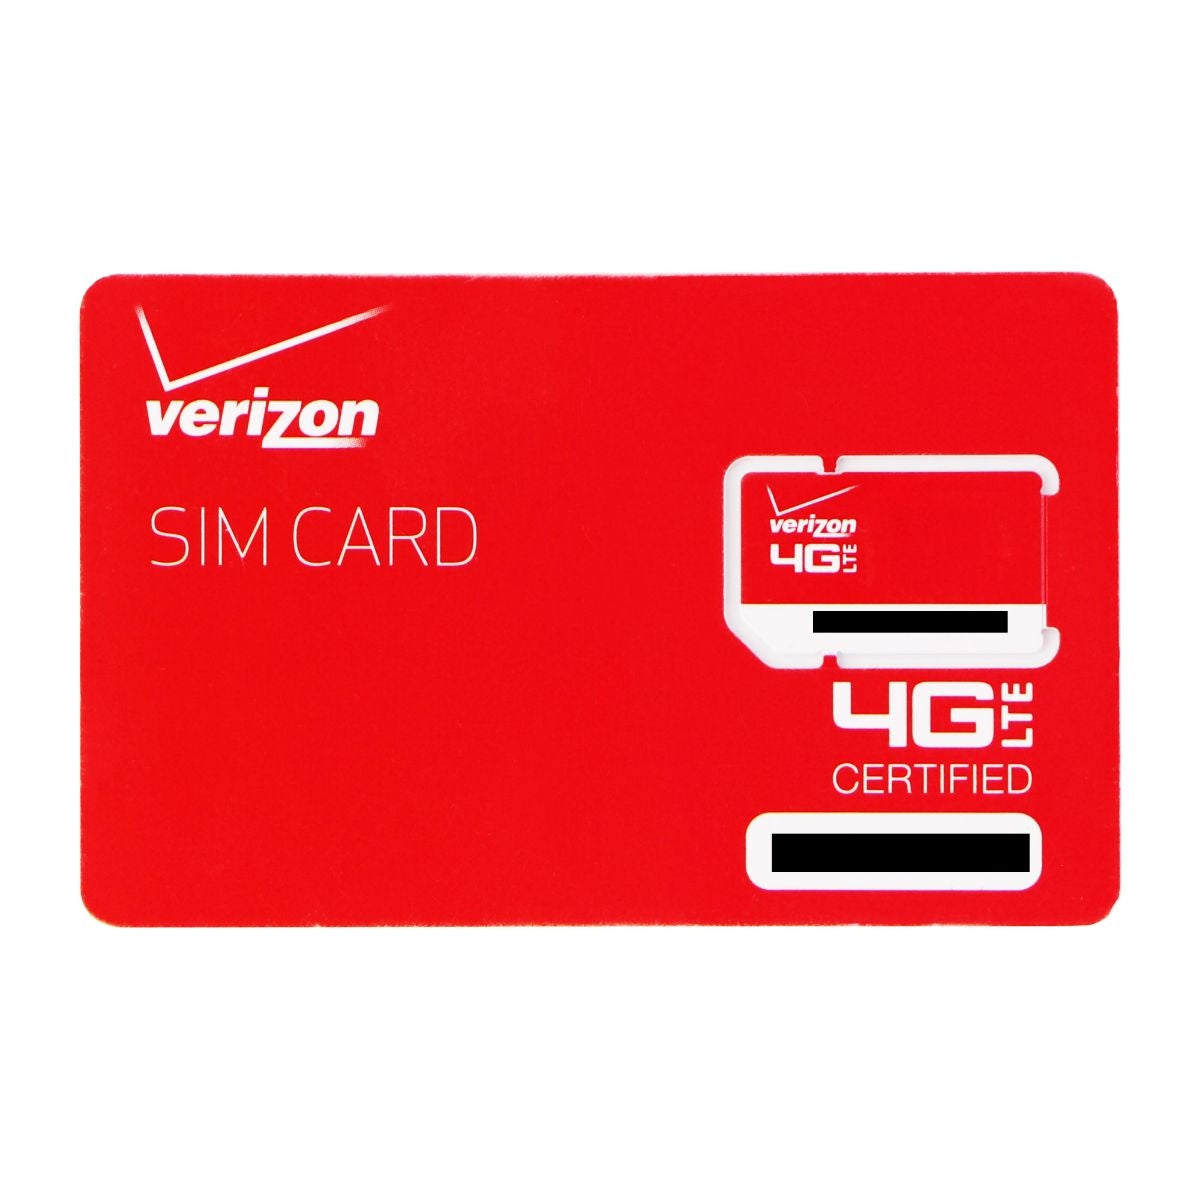 Verizon Wireless 4G LTE SIM Card 2FF (RETAILSIM4G-A) Phone Cards & SIM Cards Verizon    - Simple Cell Bulk Wholesale Pricing - USA Seller